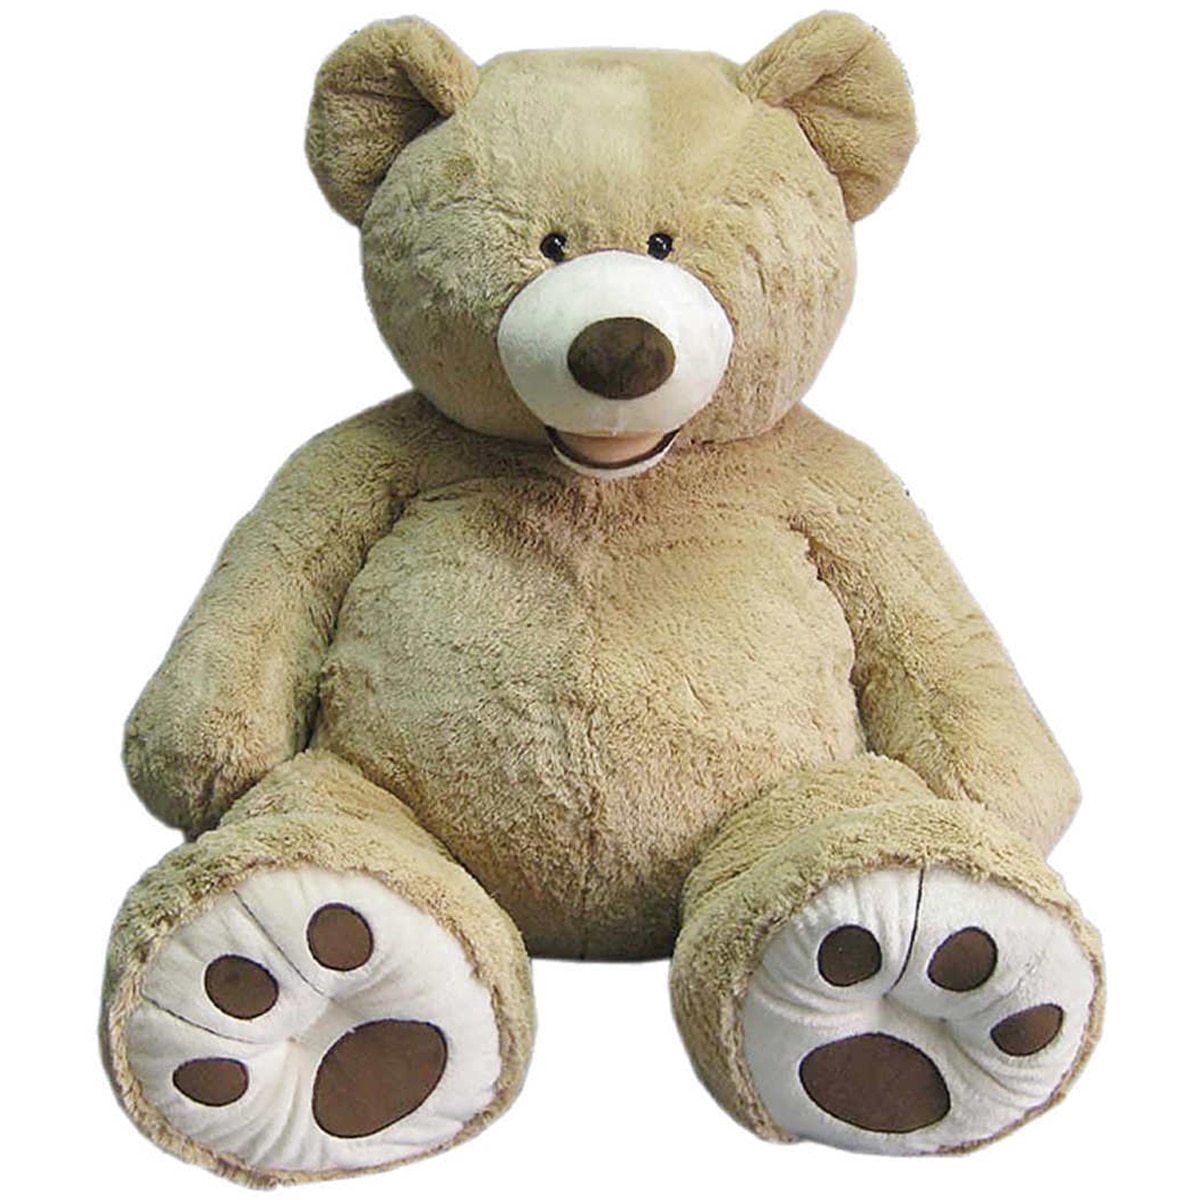 giant teddy bear from costco